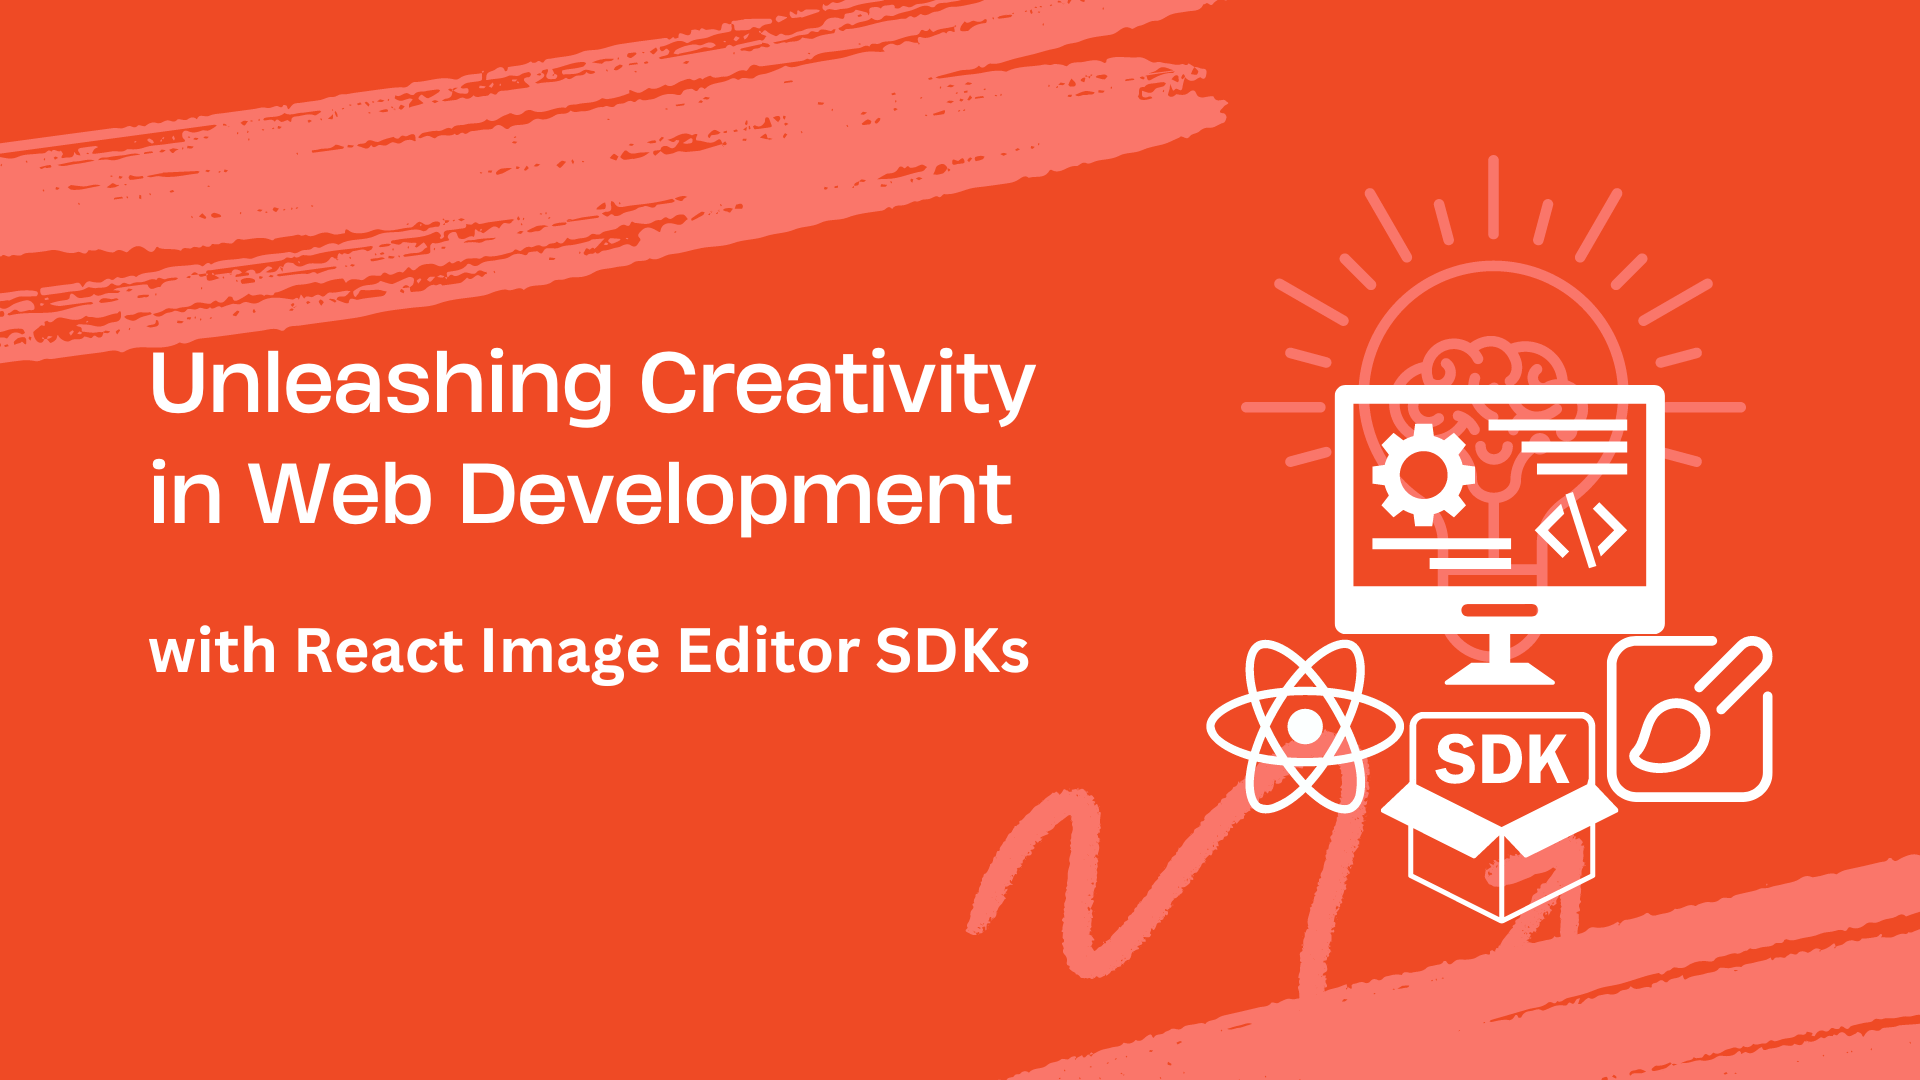 Unleashing Creativity in Web Development with React Image Editor SDKs